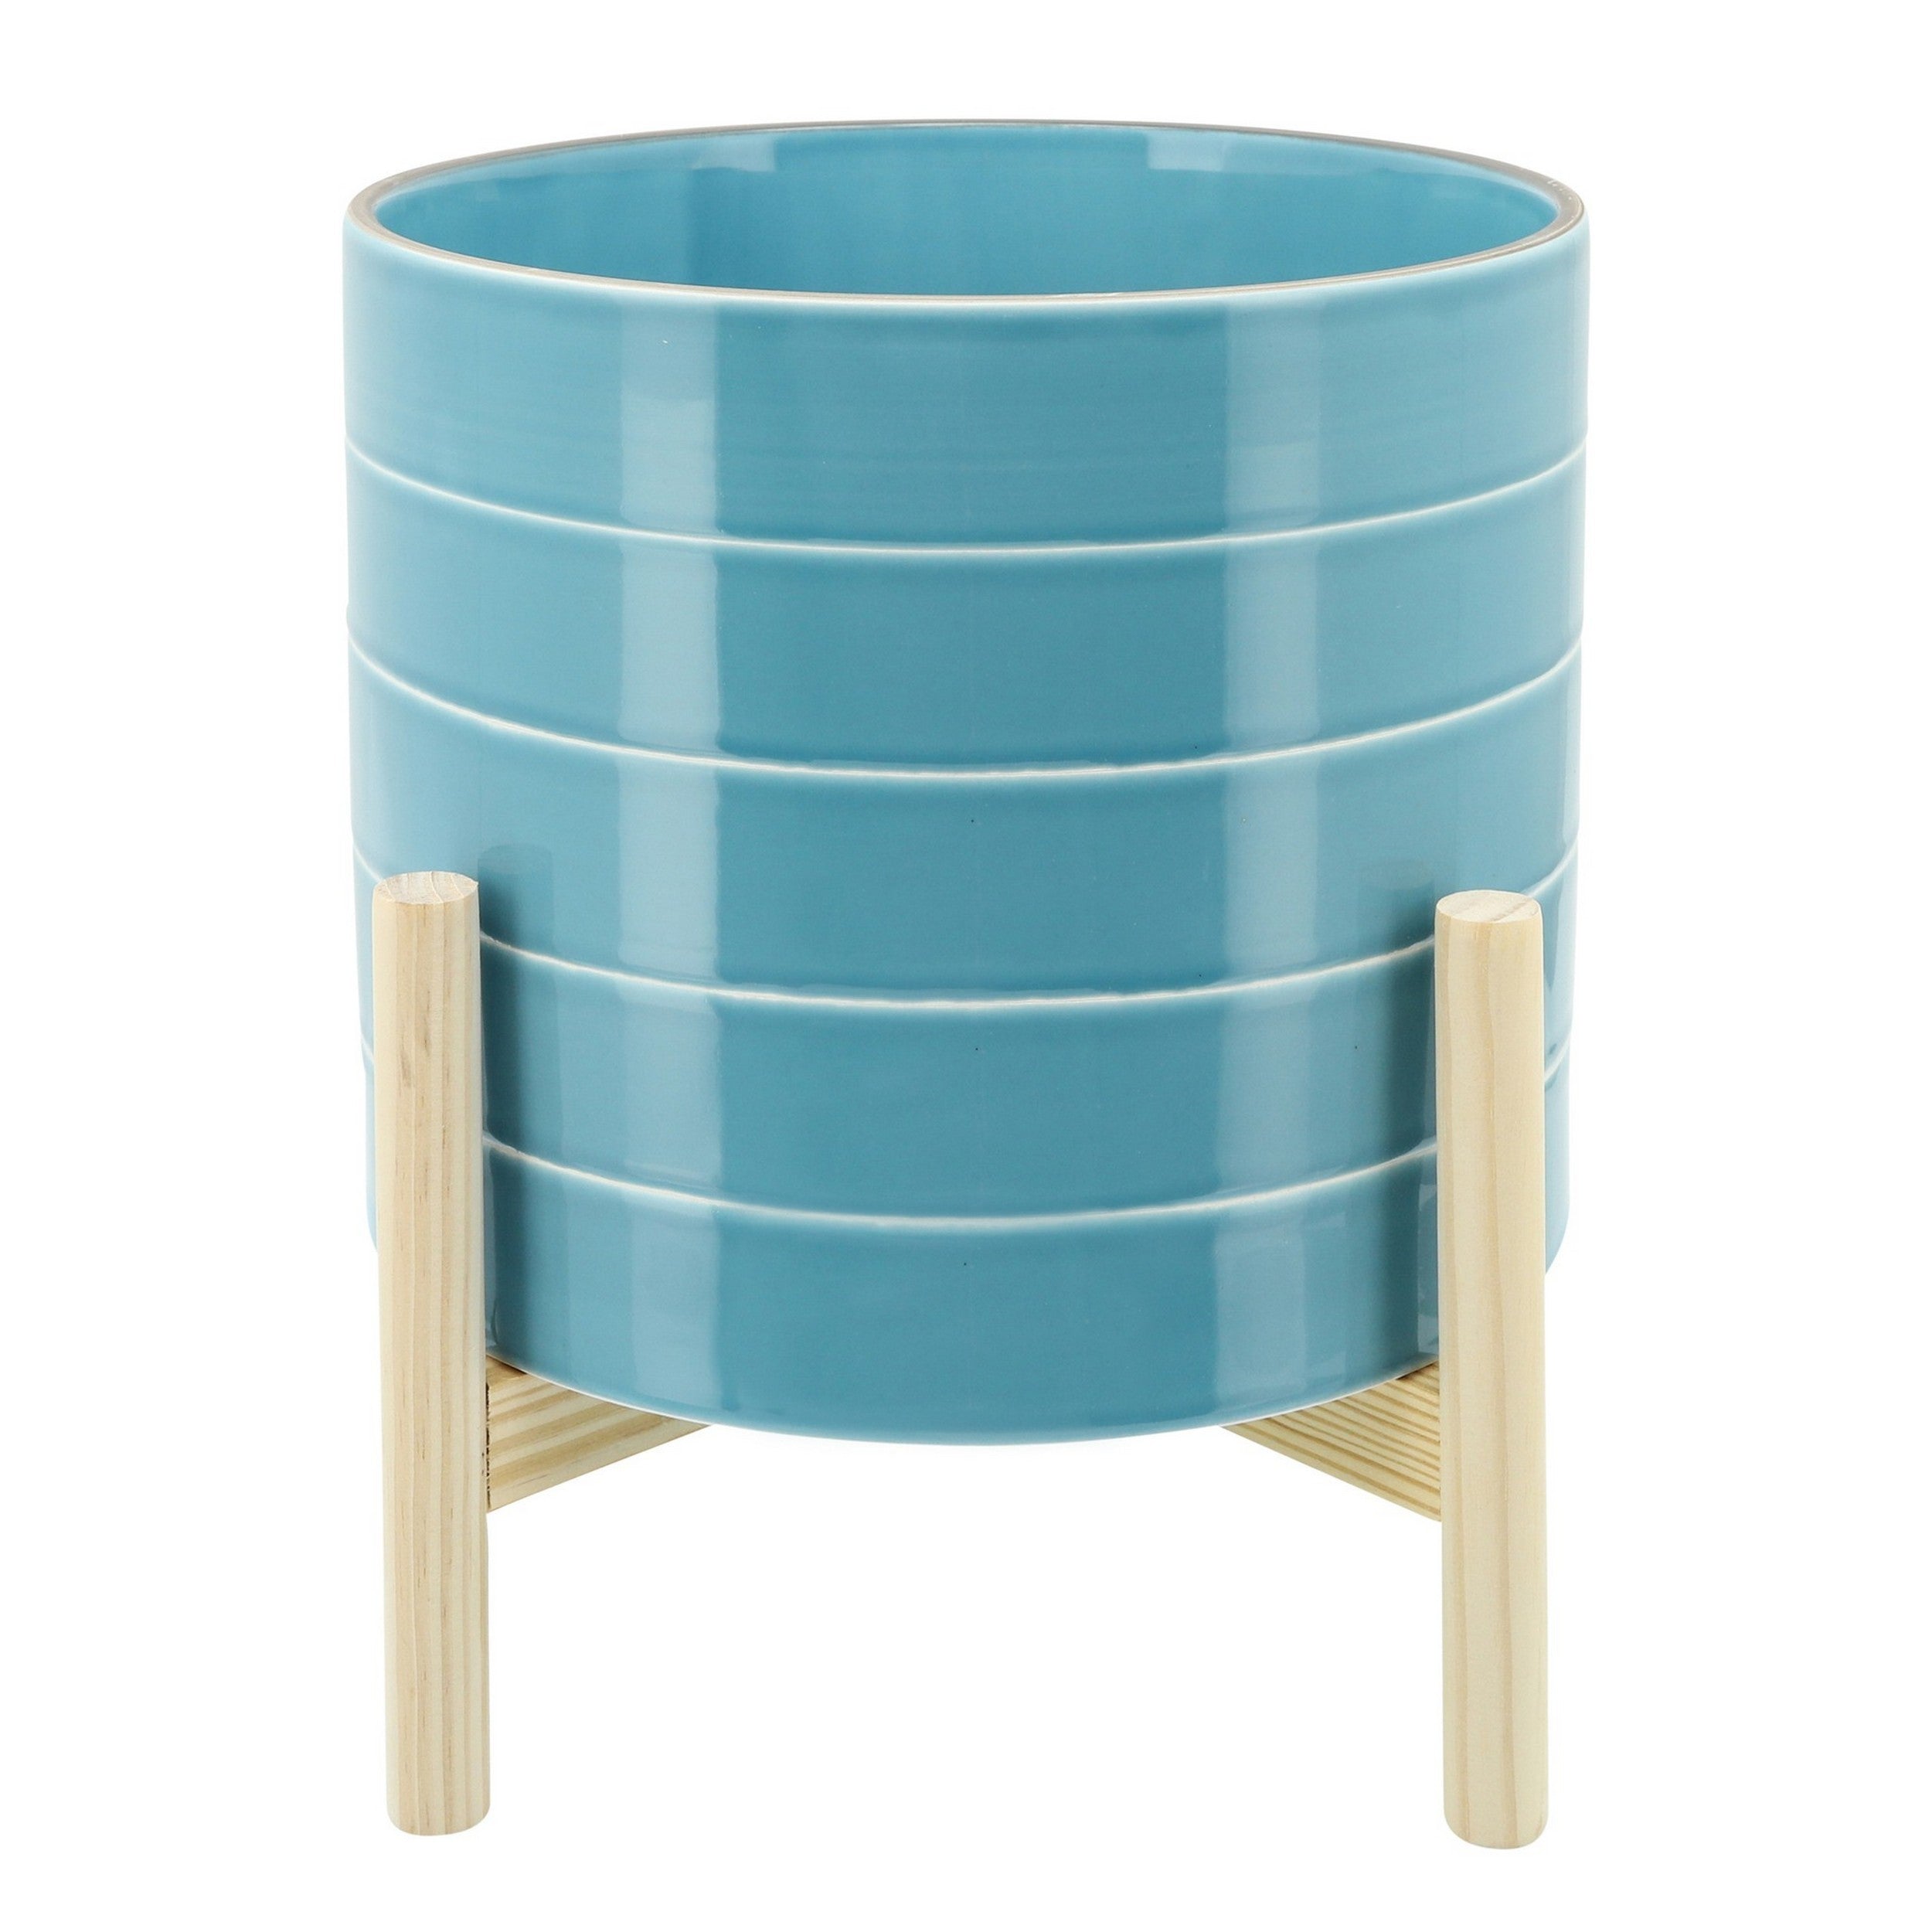 6-Inch-Ceramic-Planter,-Round,-Stripes,-Wood-Stand,-Light-Blue-Pots-&-Planters